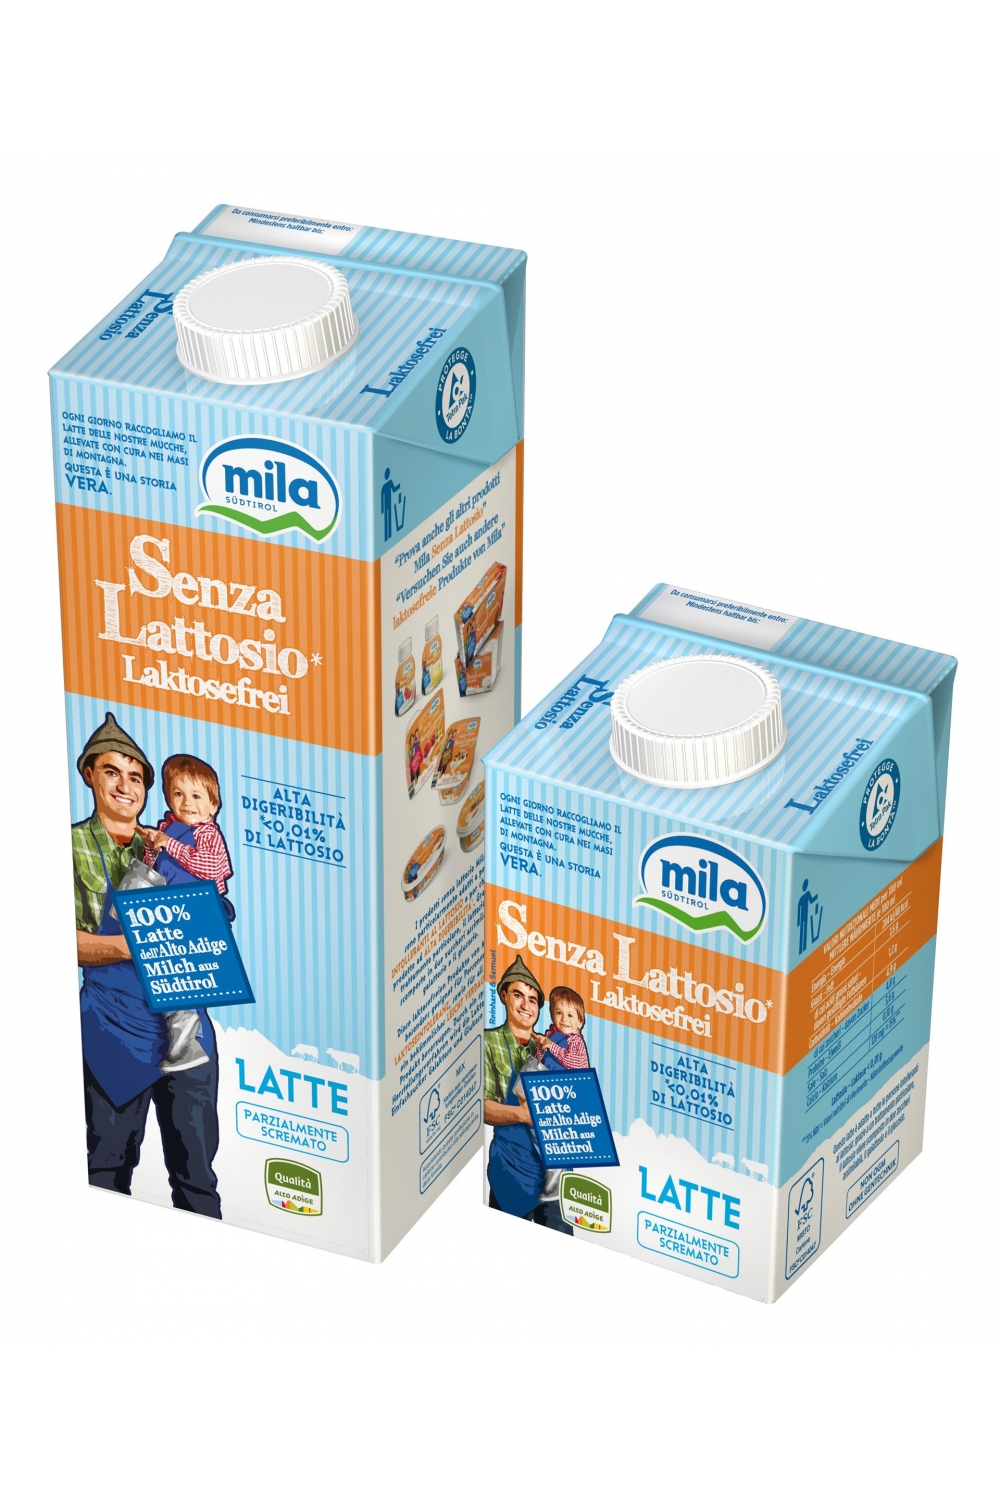 https://karadarshop.com/27211-large_default/latte-uht-senza-lattosio-parzialmente-scremato-mila-latteria.jpg